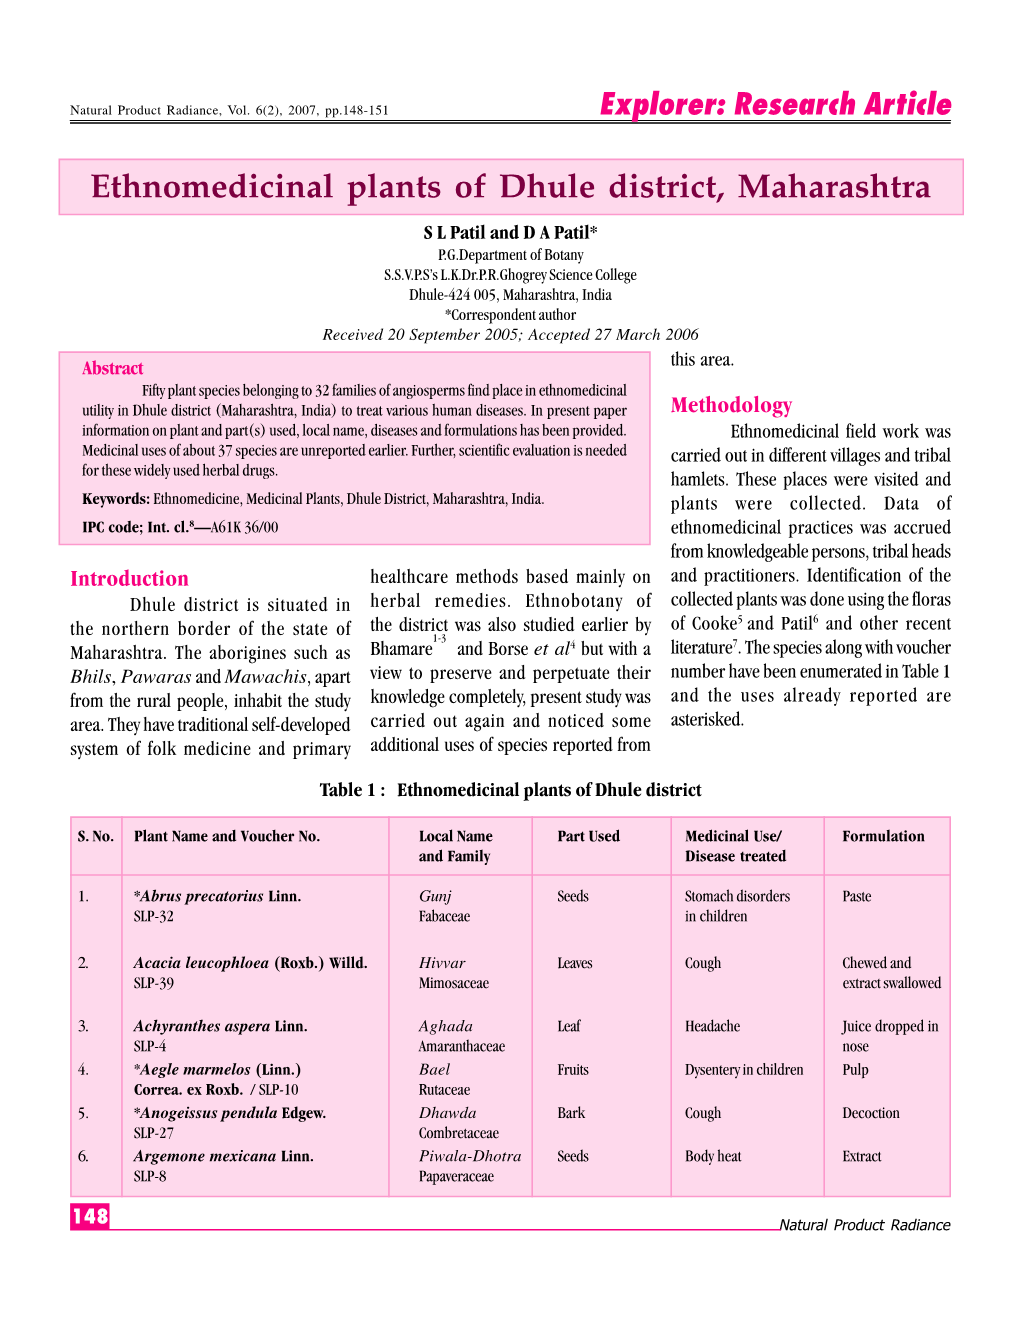 Ethnomedicinal Plants of Dhule District, Maharashtra